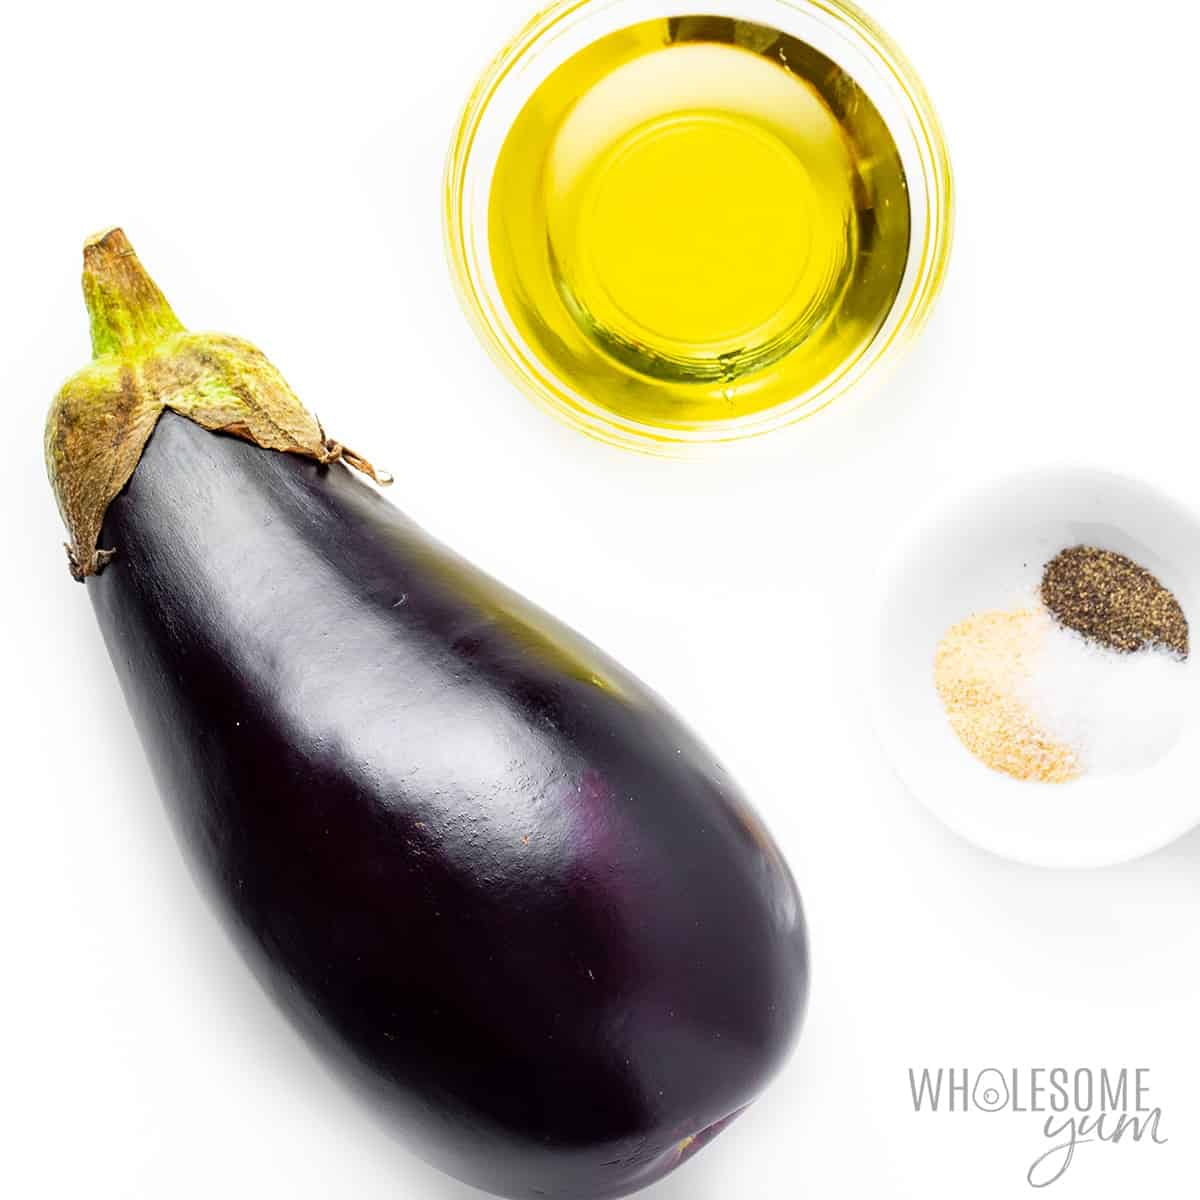 Sauteed eggplant ingredients.